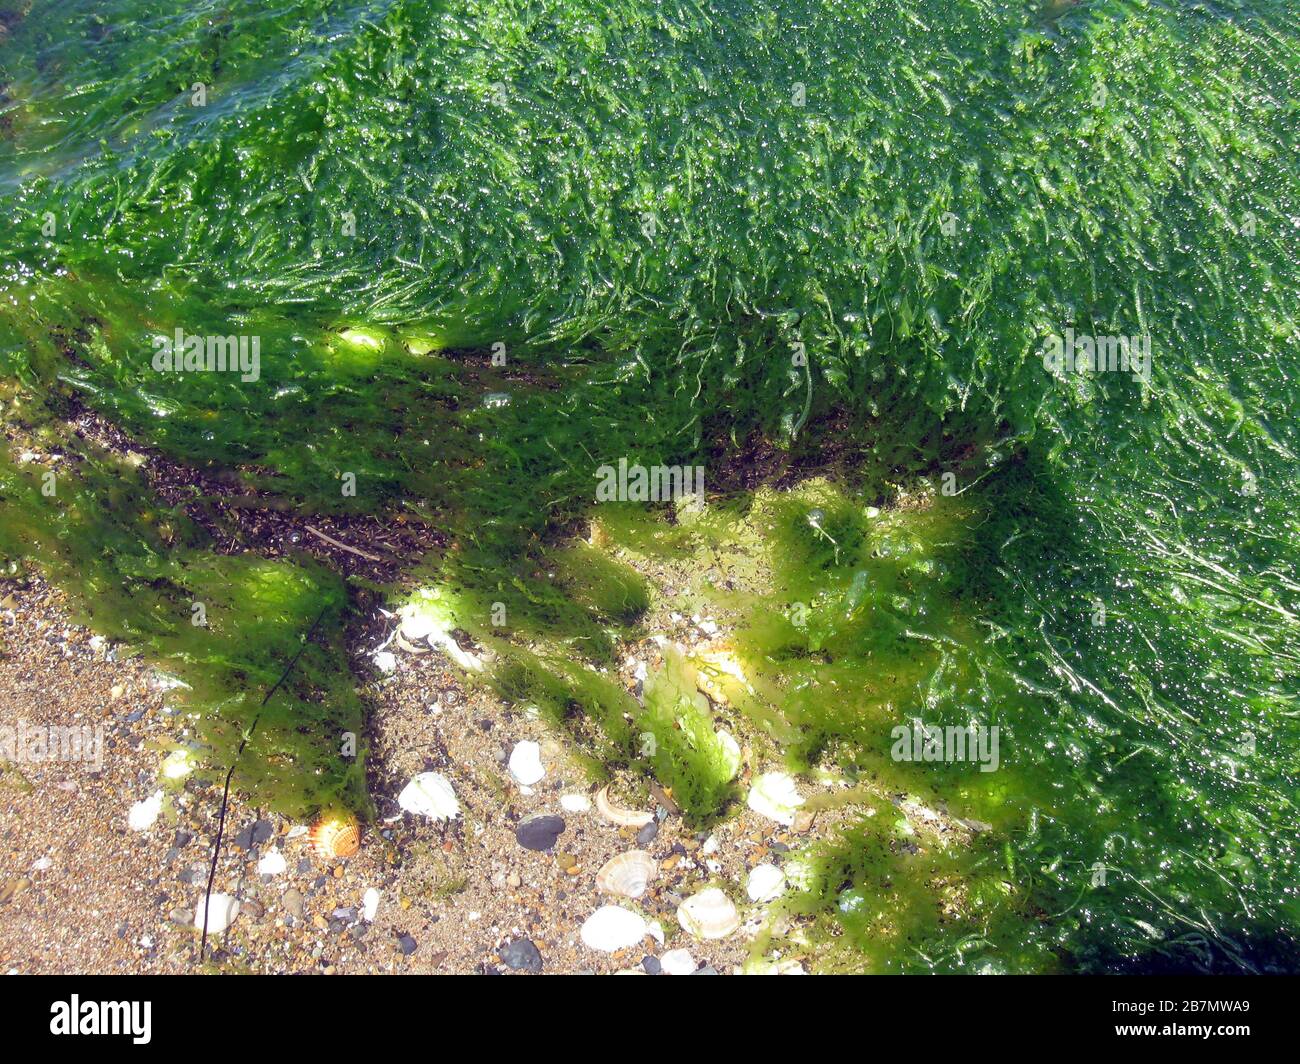 Rock river weed, Cladophora sp. Stock Photo